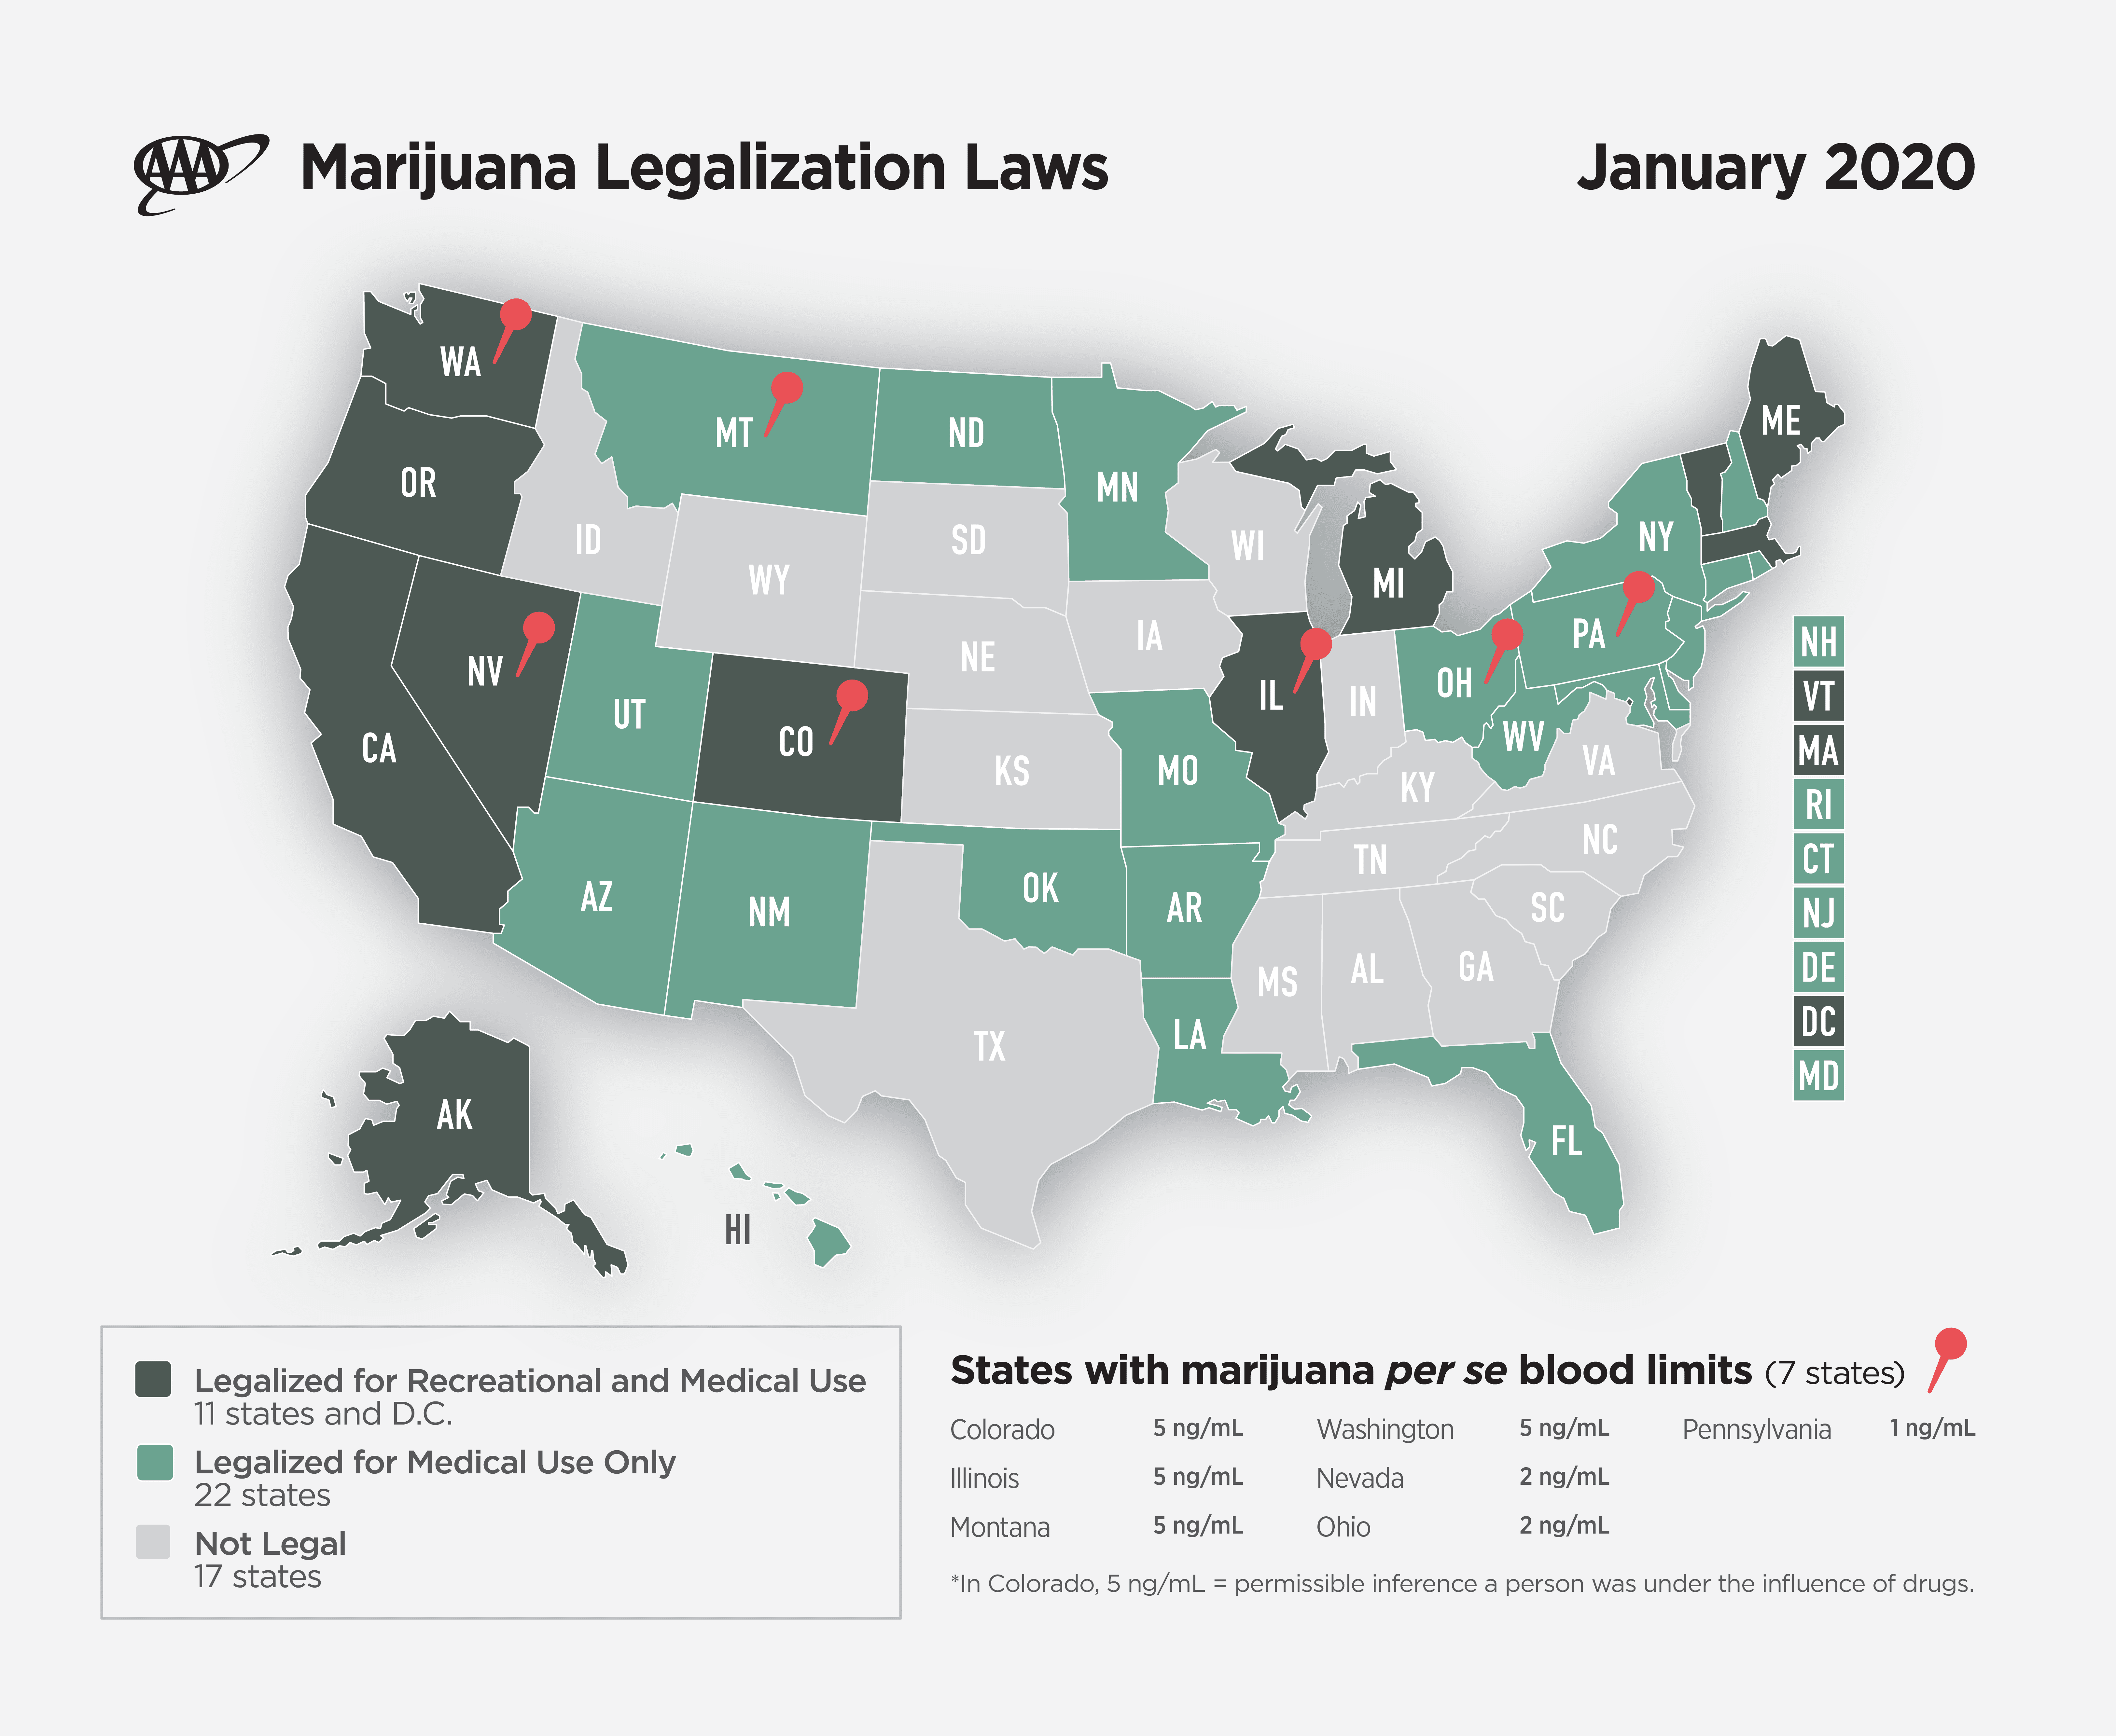 AAA Cannabis Study 2020 Map: Drivers using marijuana